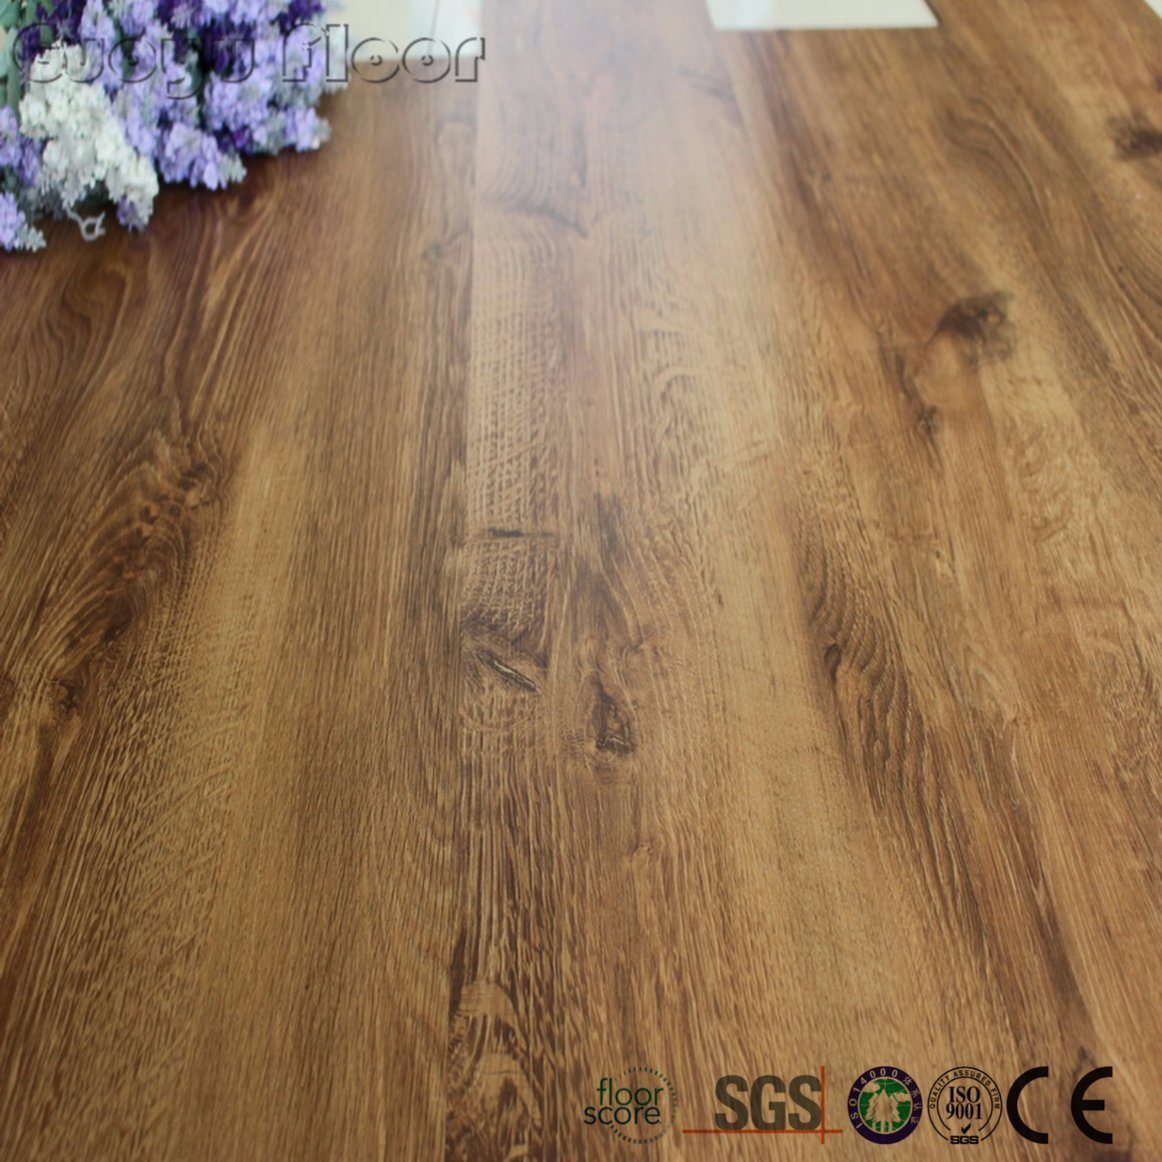 Cheap Wood Loose Lay Lvt Flooring for Hospitals